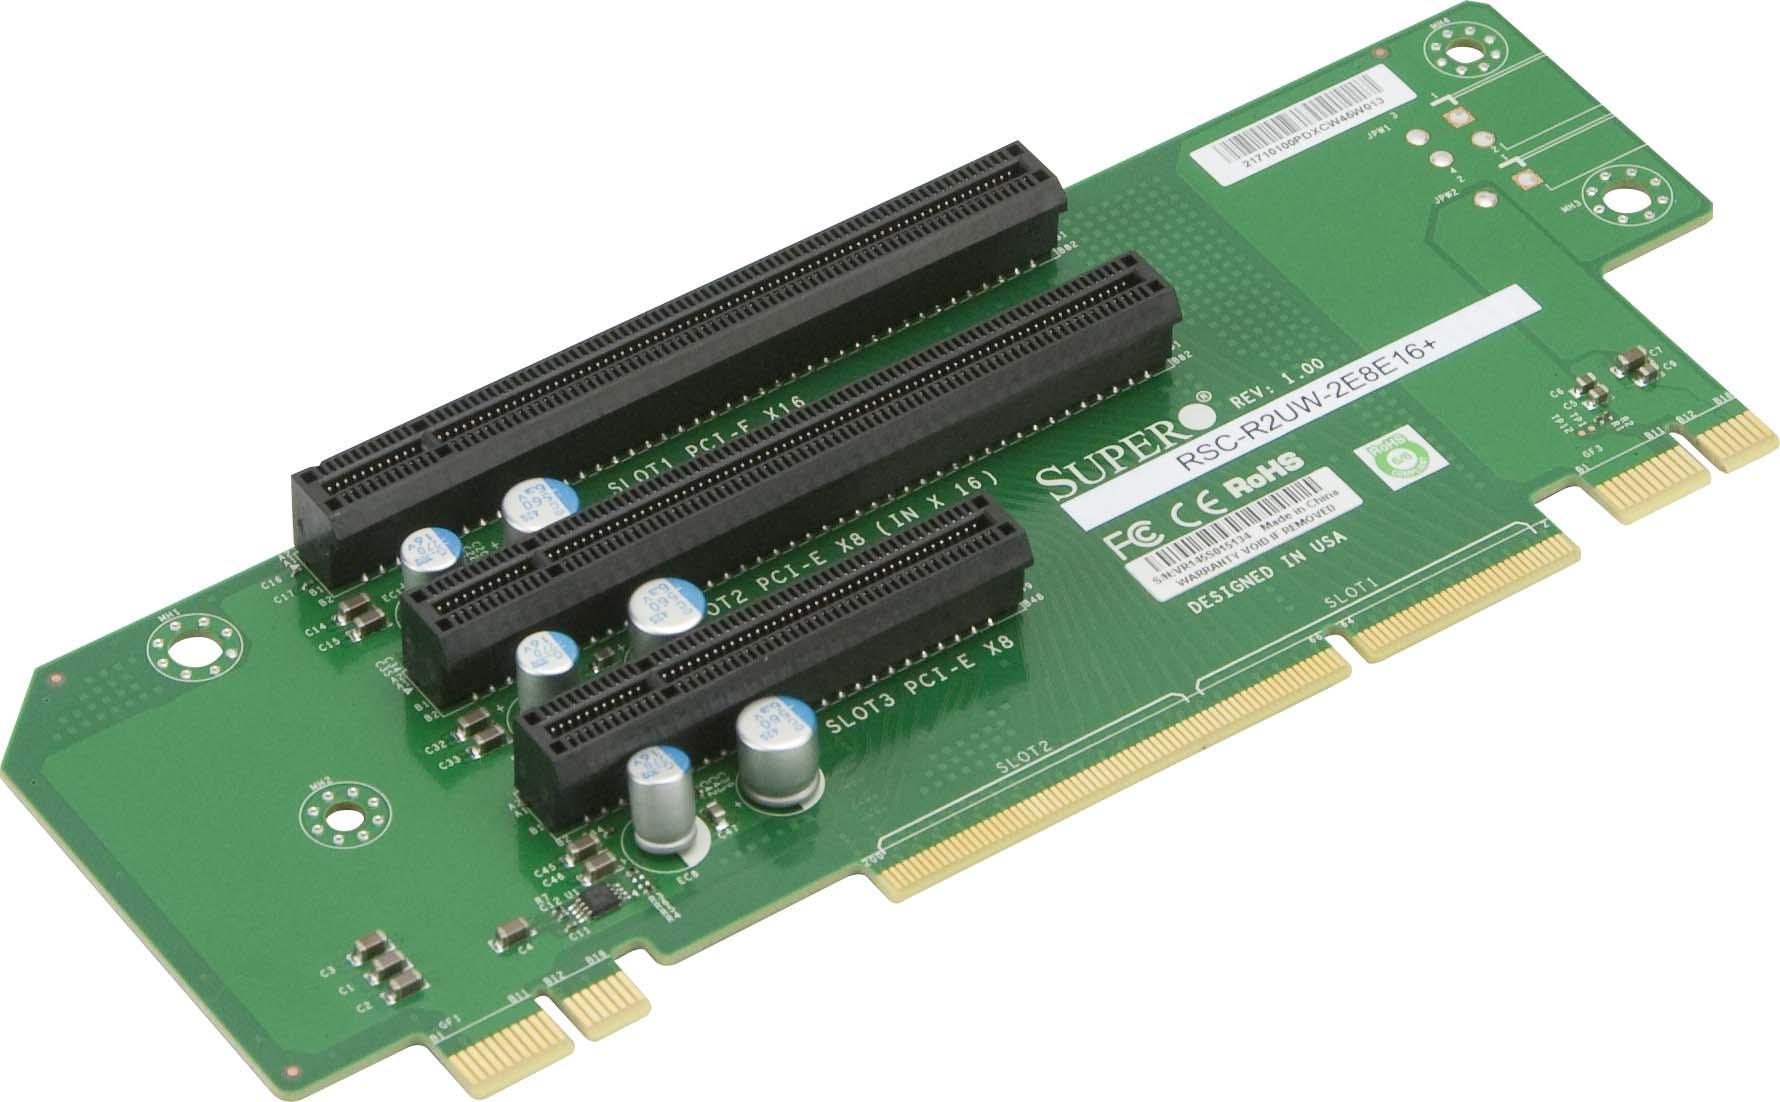 Шины расширений. Слот PCI-ex1. Слот PCI адаптер Riser Card. Supermicro плата расширения. PCI-E плата расширения u2.